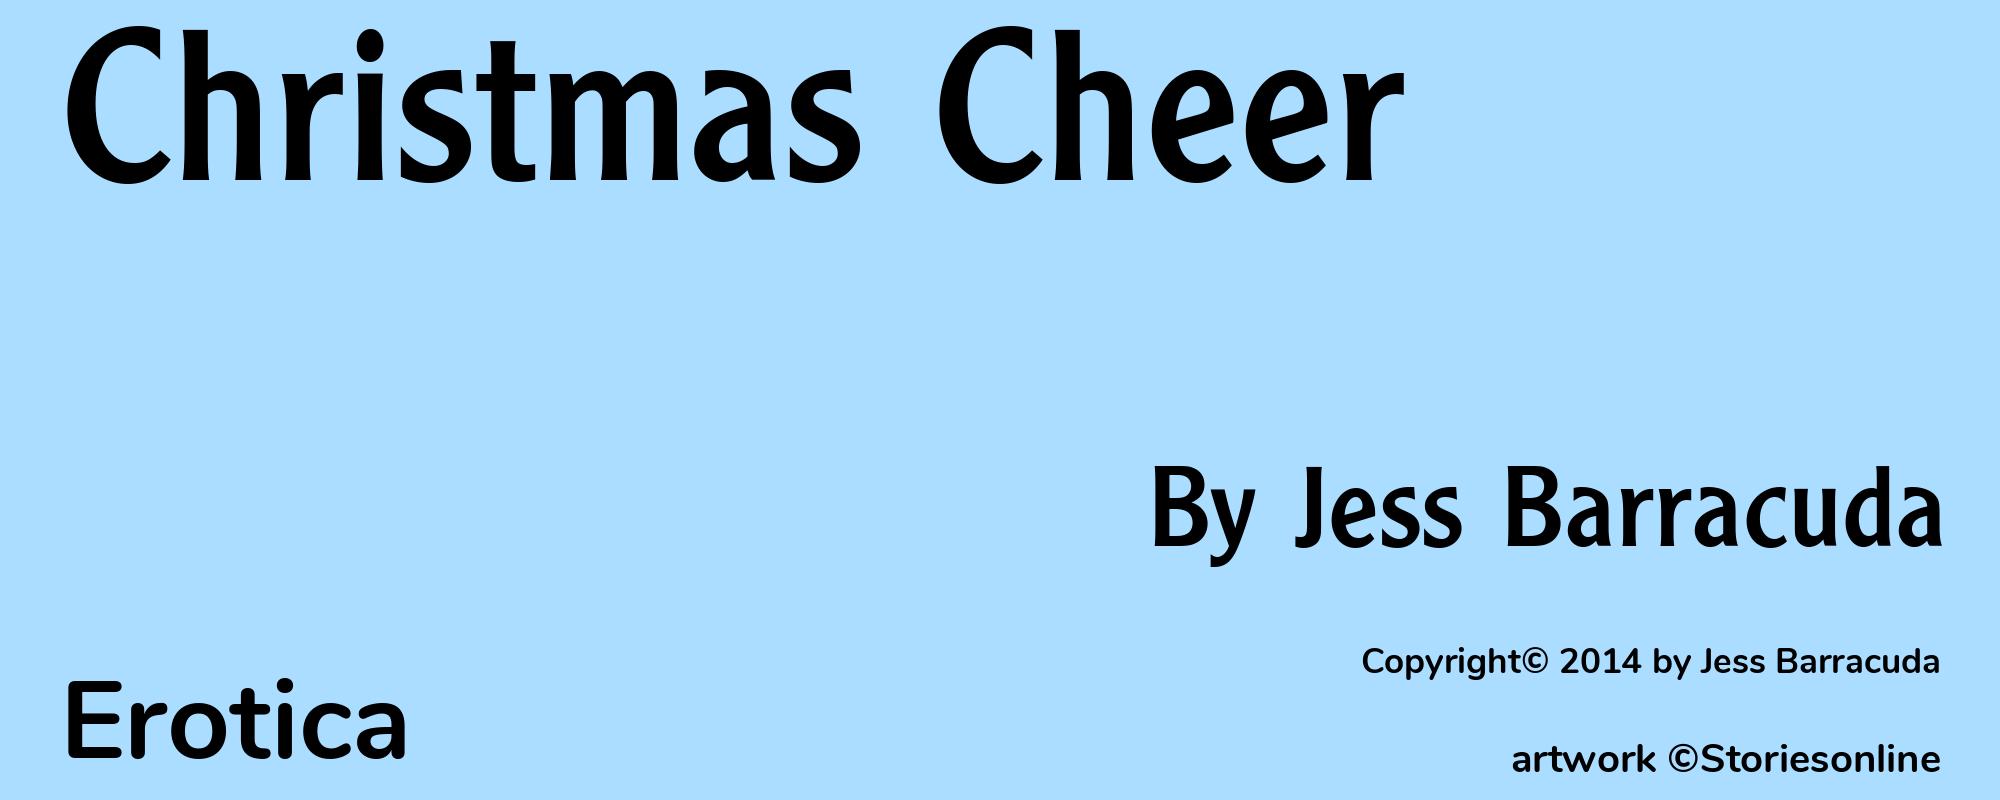 Christmas Cheer - Cover